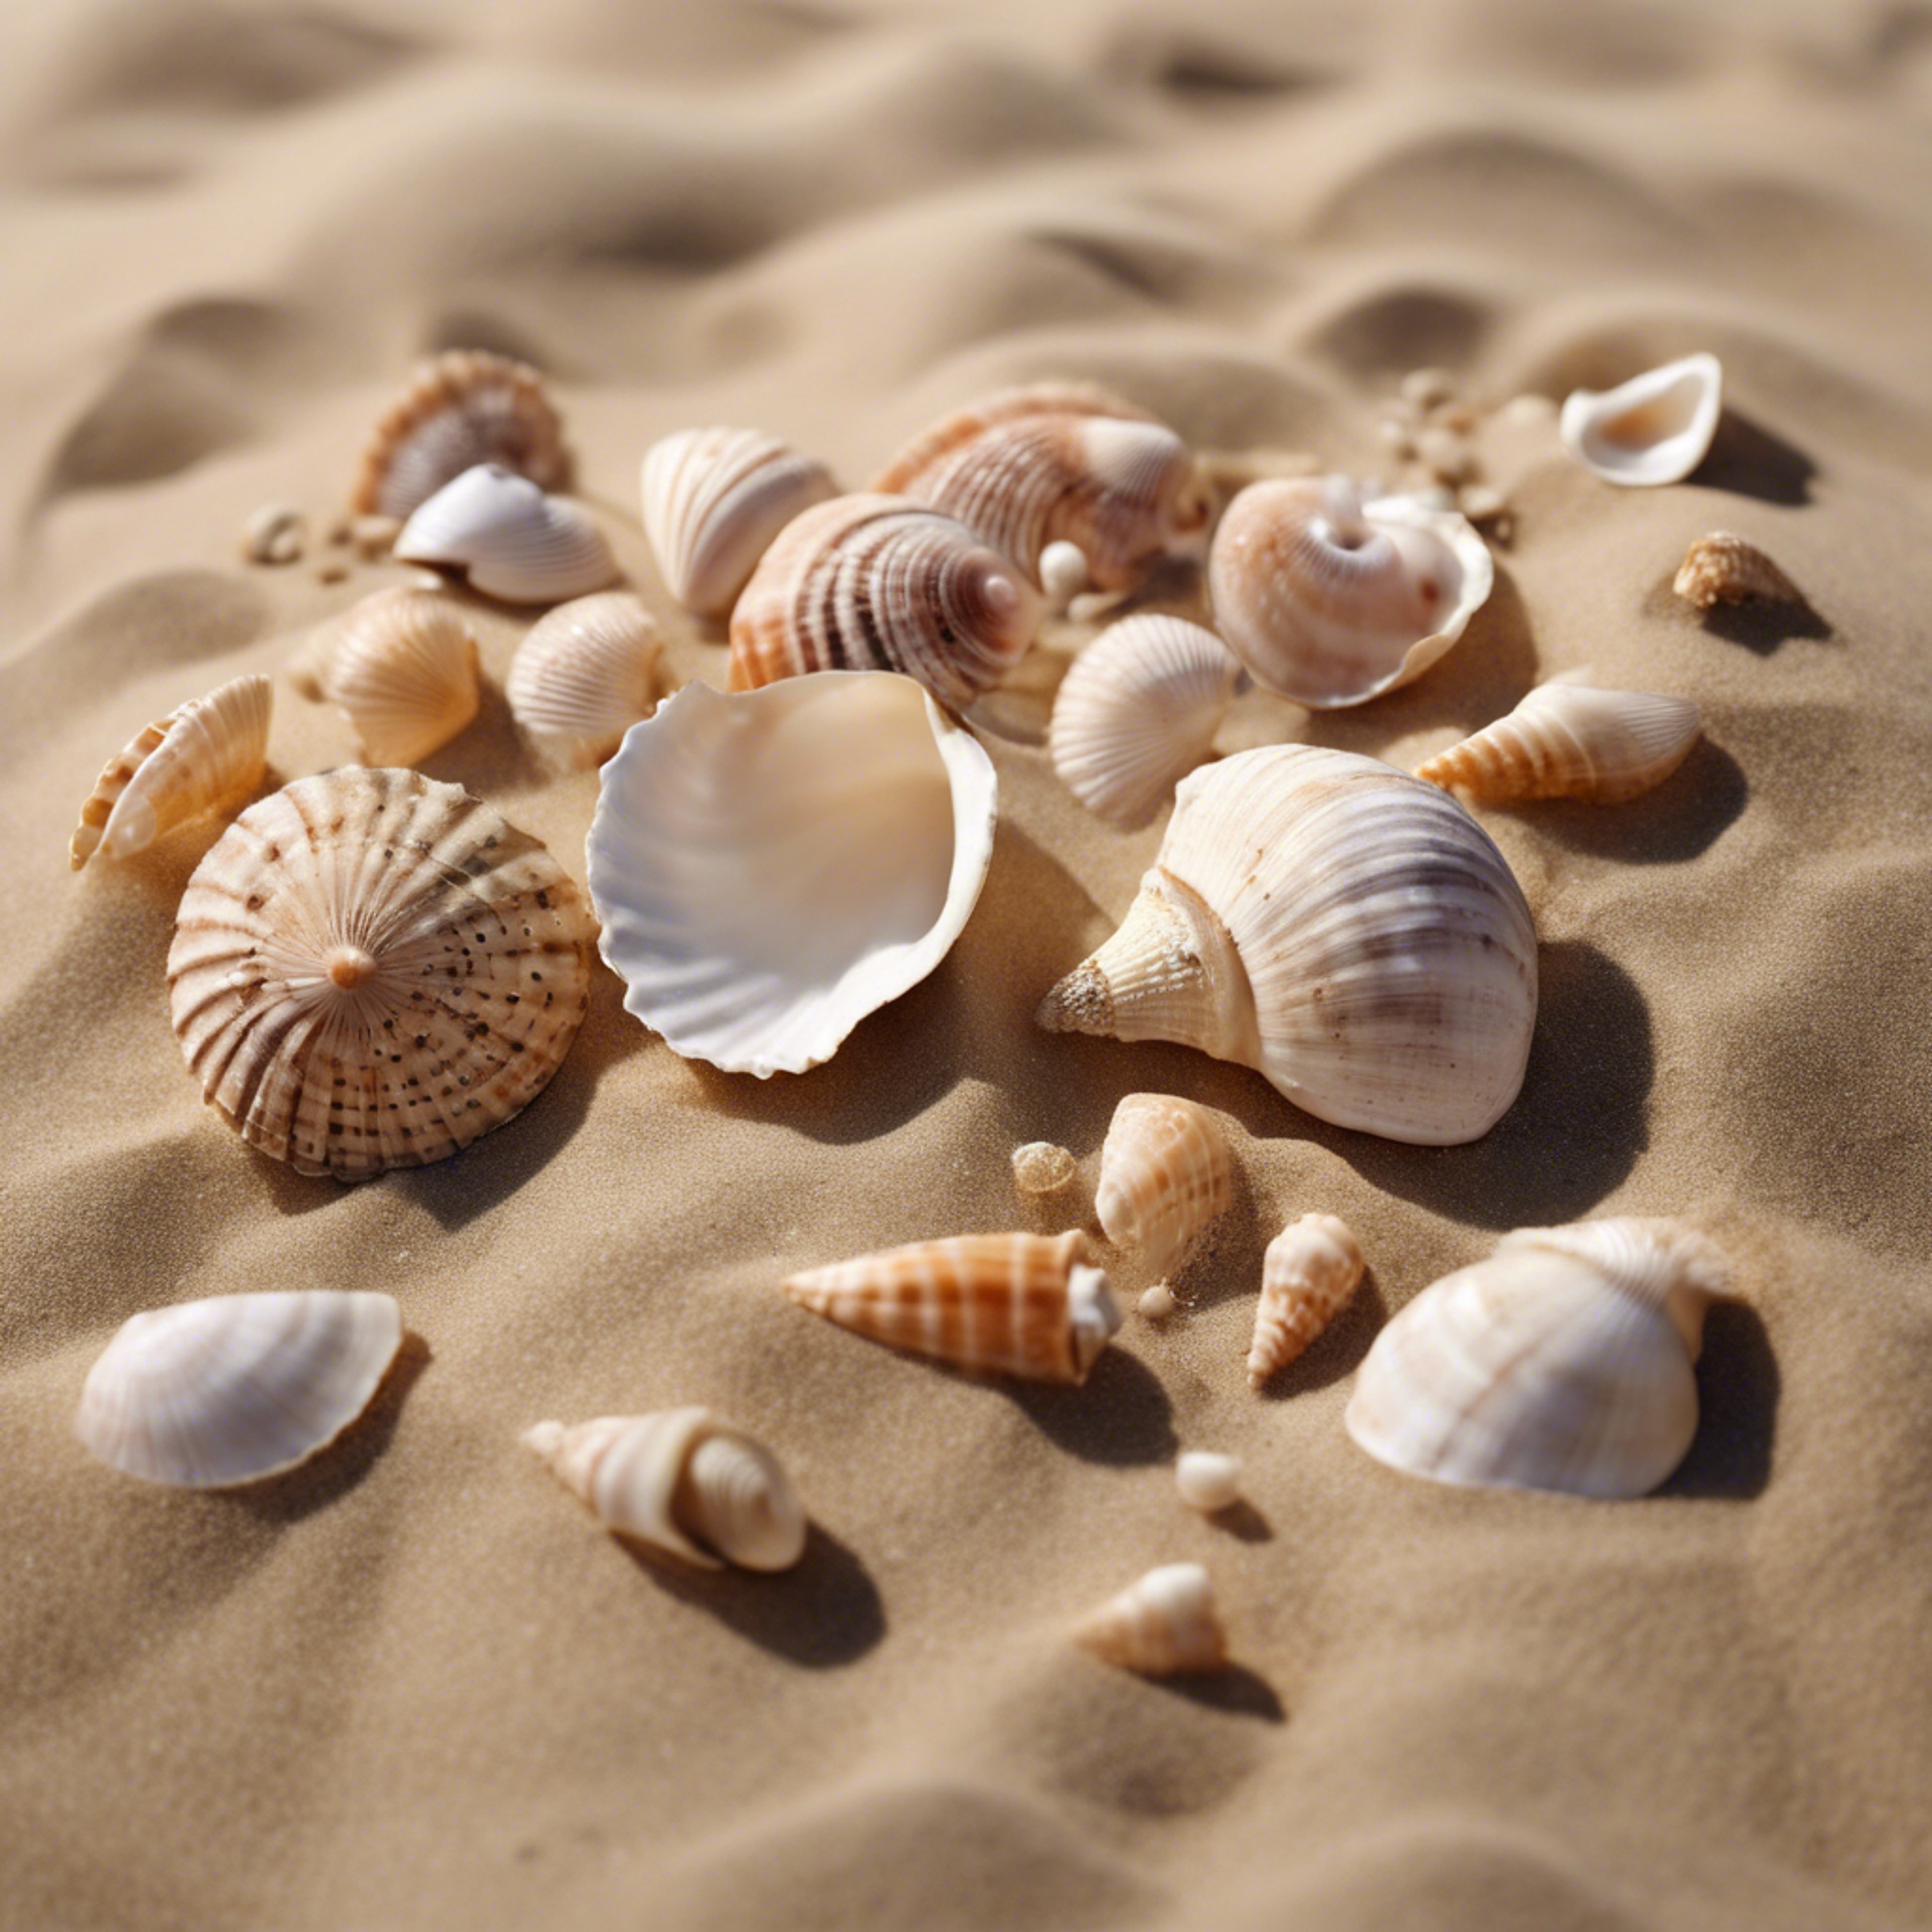 An arrangement of seashells of various sizes in a cool beige sand. Tapéta[d4509fc1f43d45f6bba6]